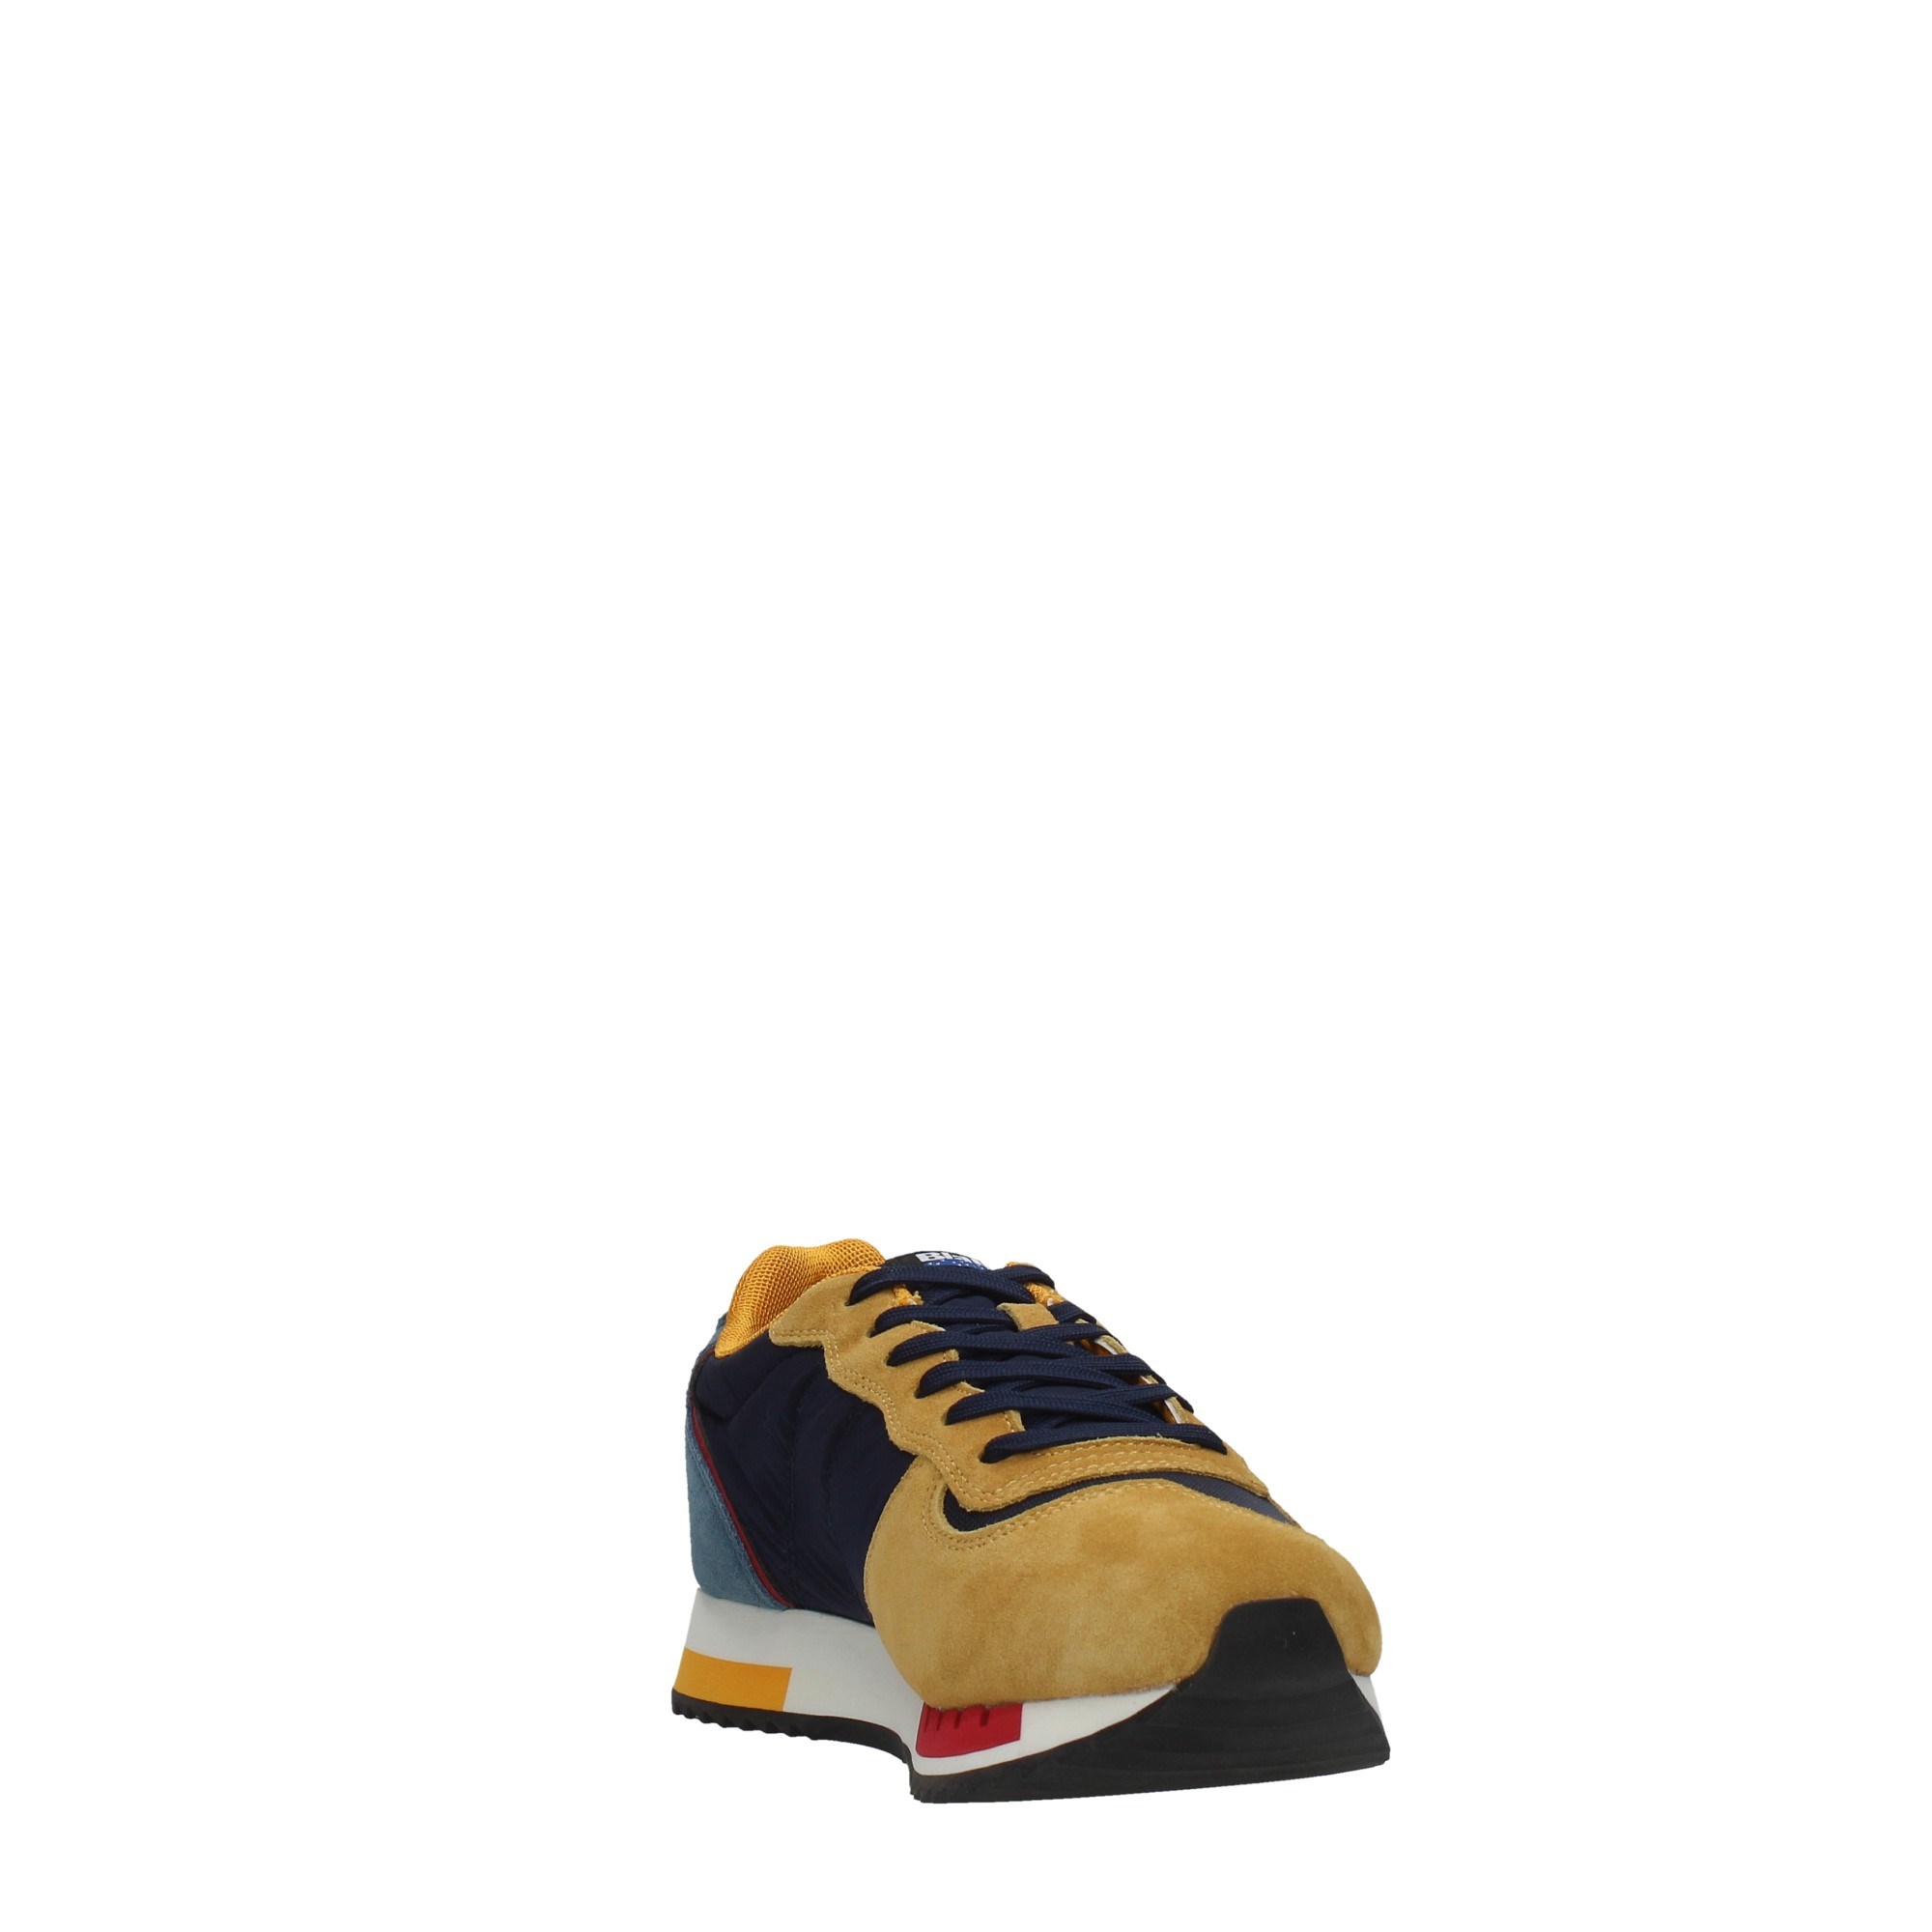 Blauer Shoes Man Sneakers QUENS01/MES